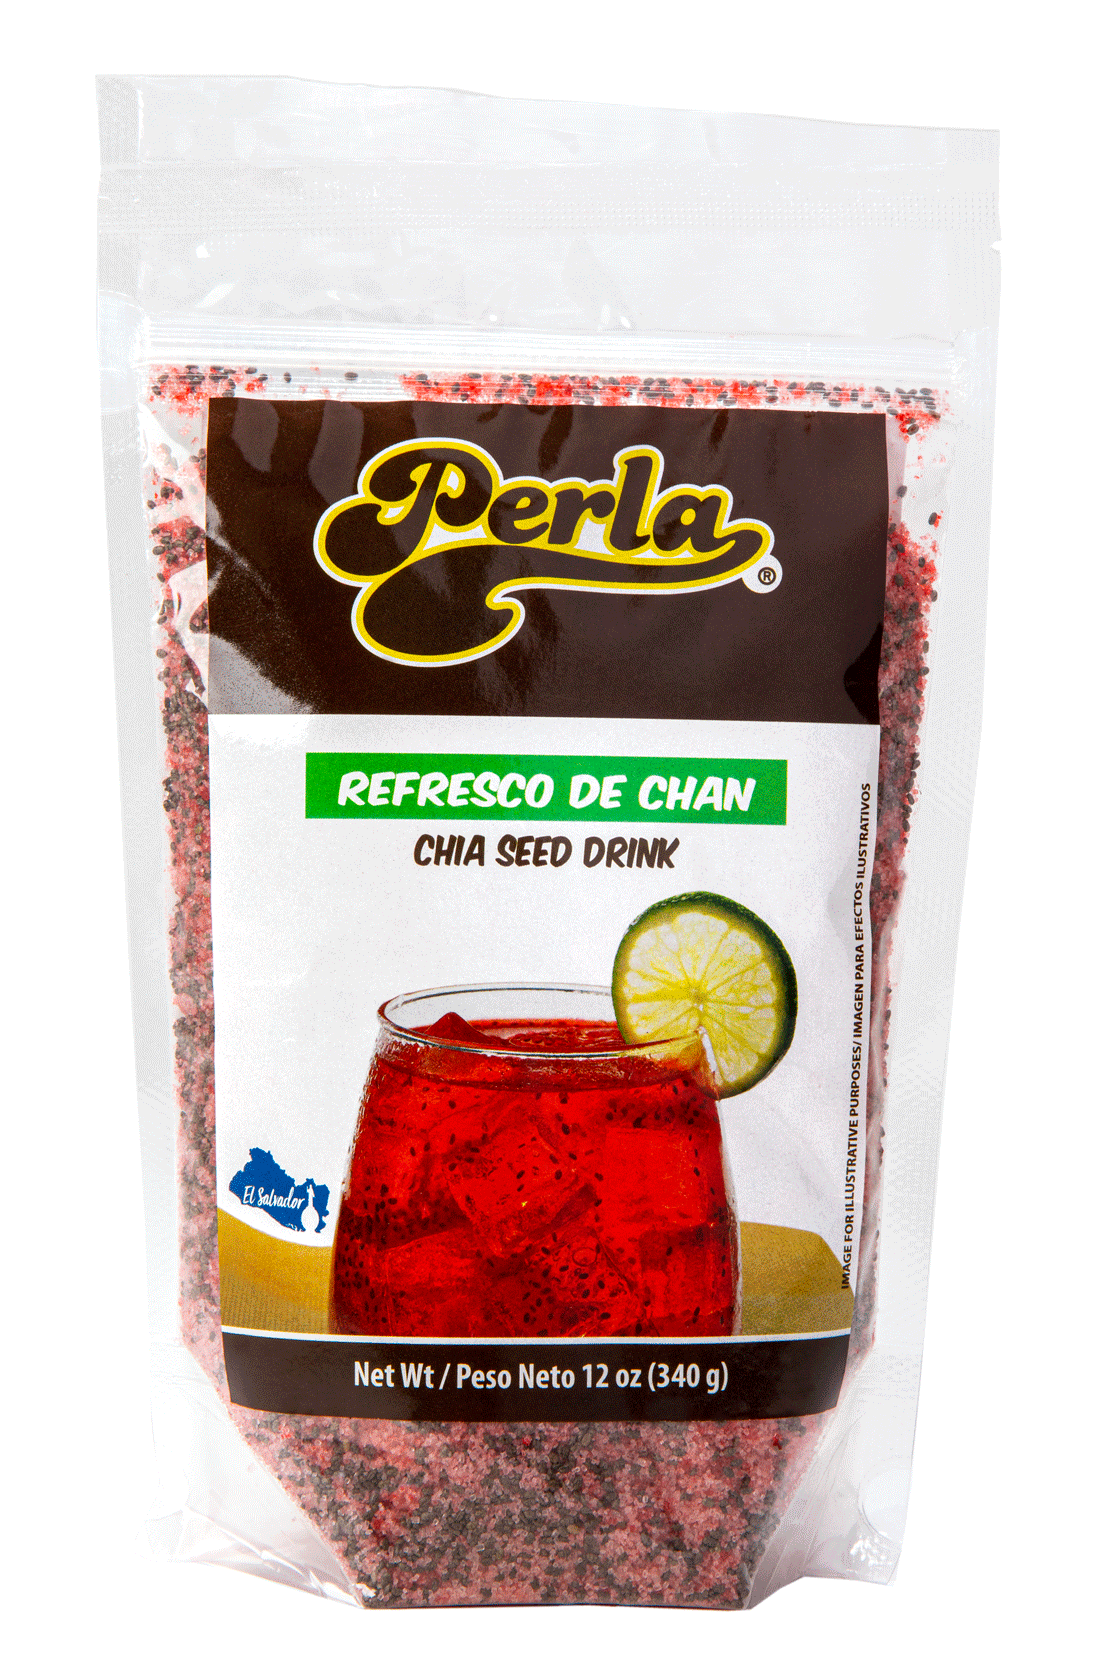 Perla Refresco de Chan Salvadoreno (Chia Seed Drink) 12 oz